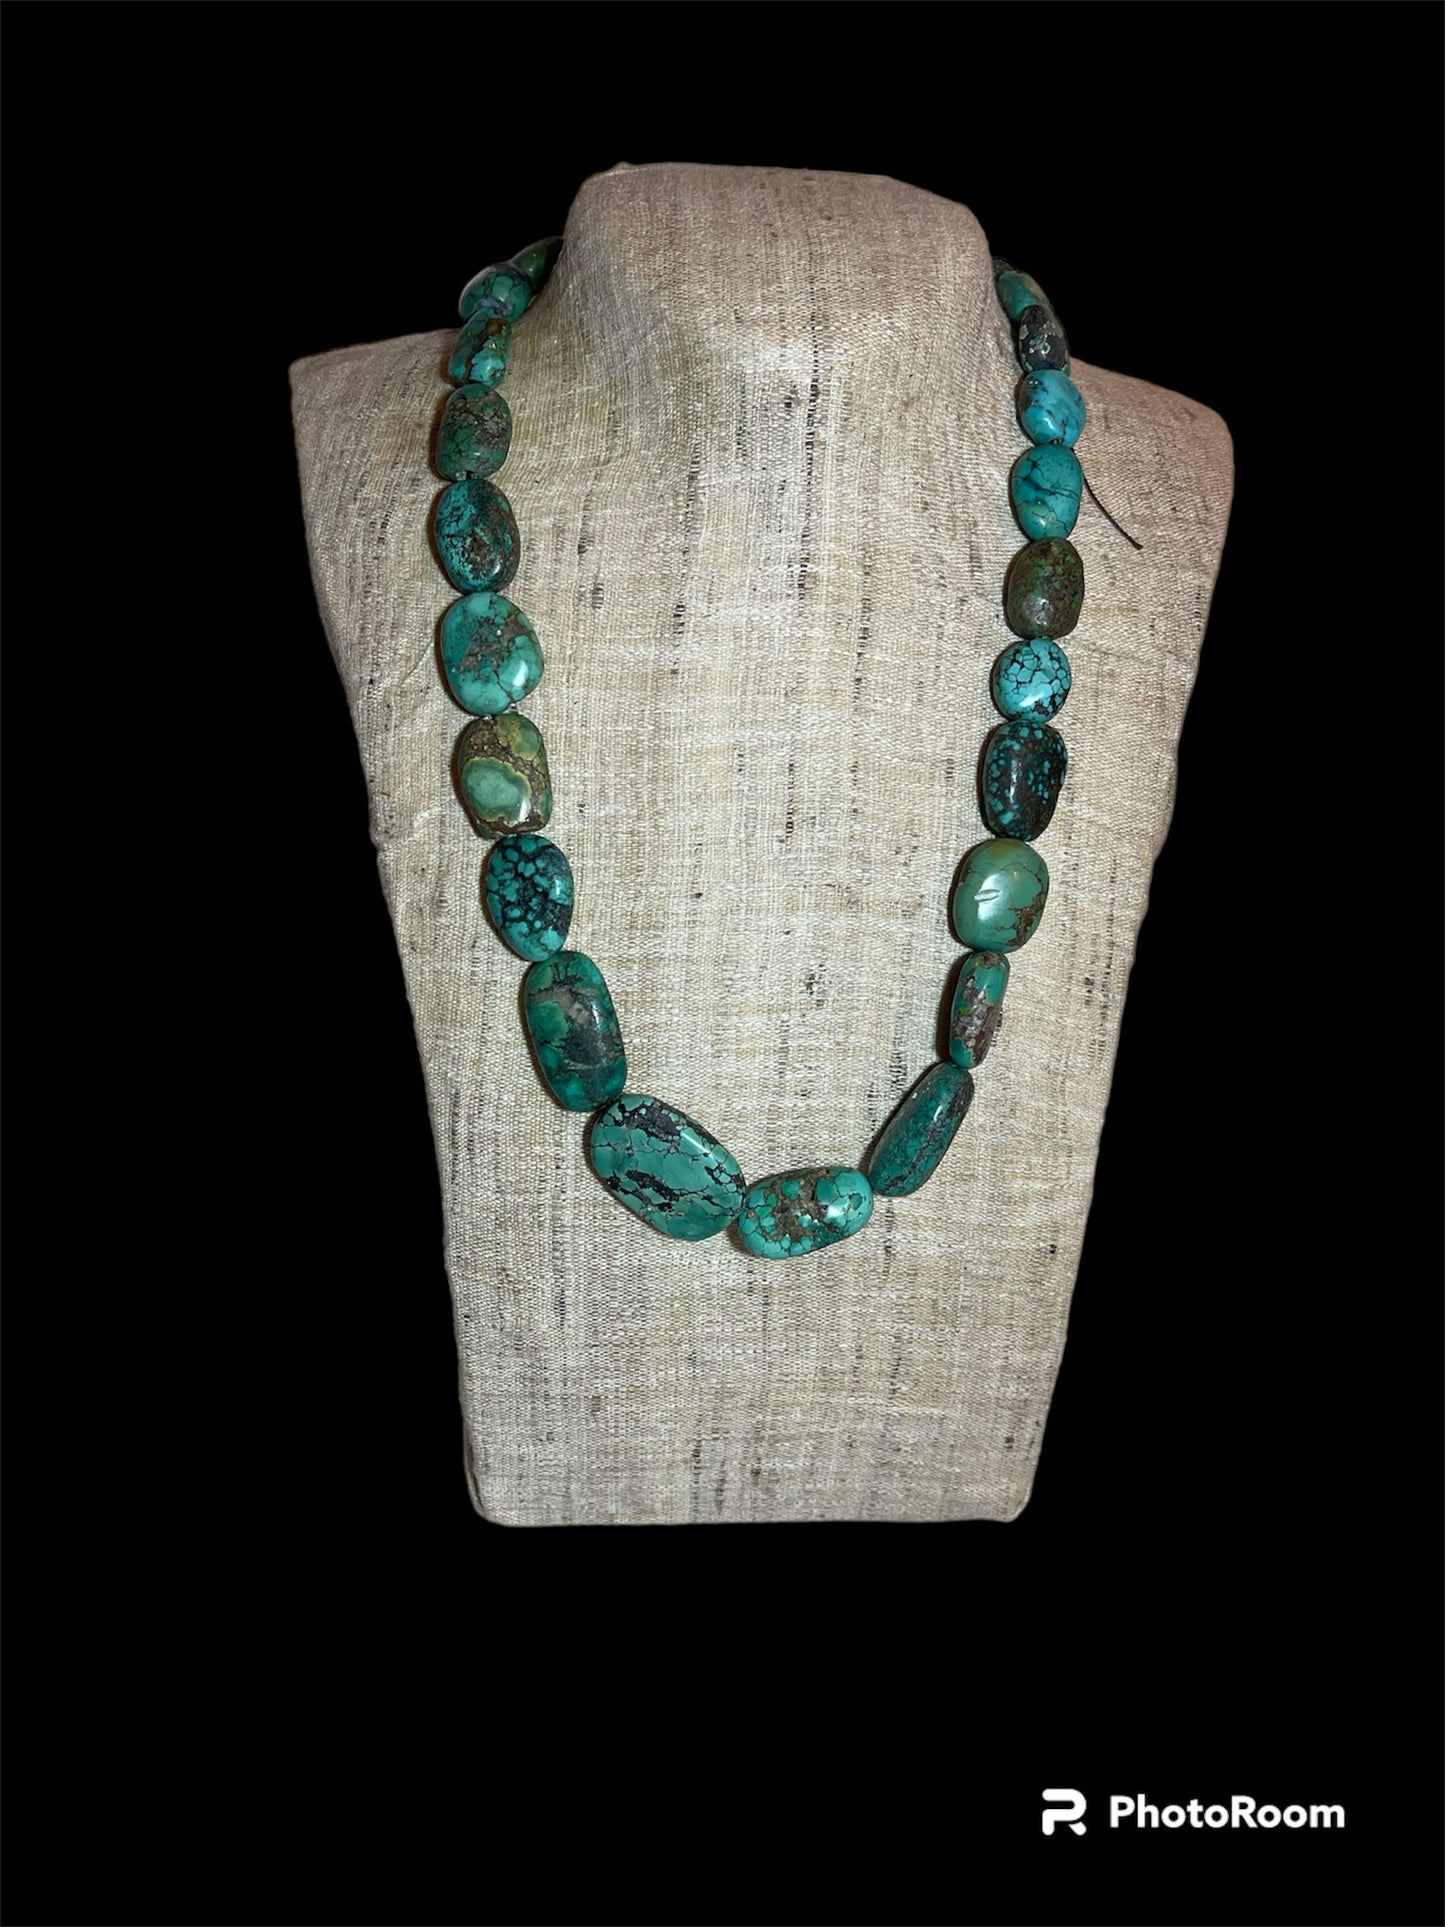 Necklaces with antique Tibetan / Ladakhi turquoise beads